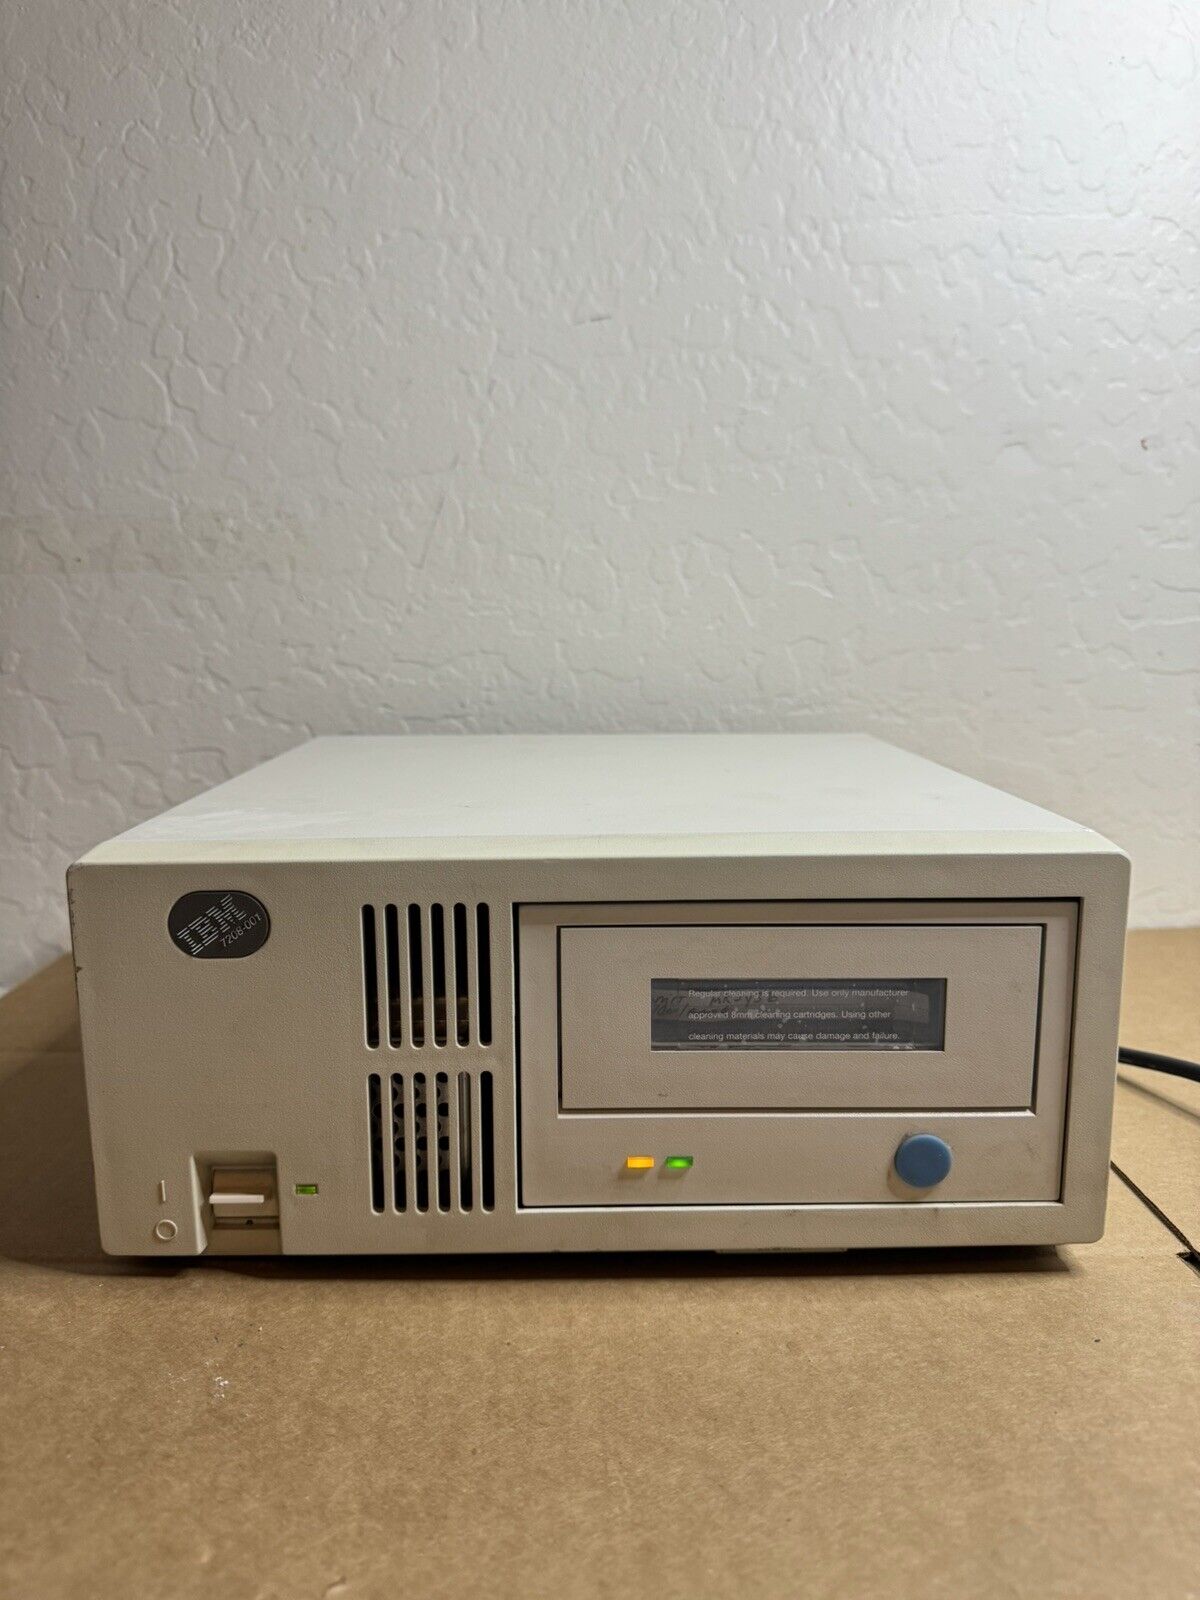 IBM 7208-001 External 8mm SCSI Tape Drive